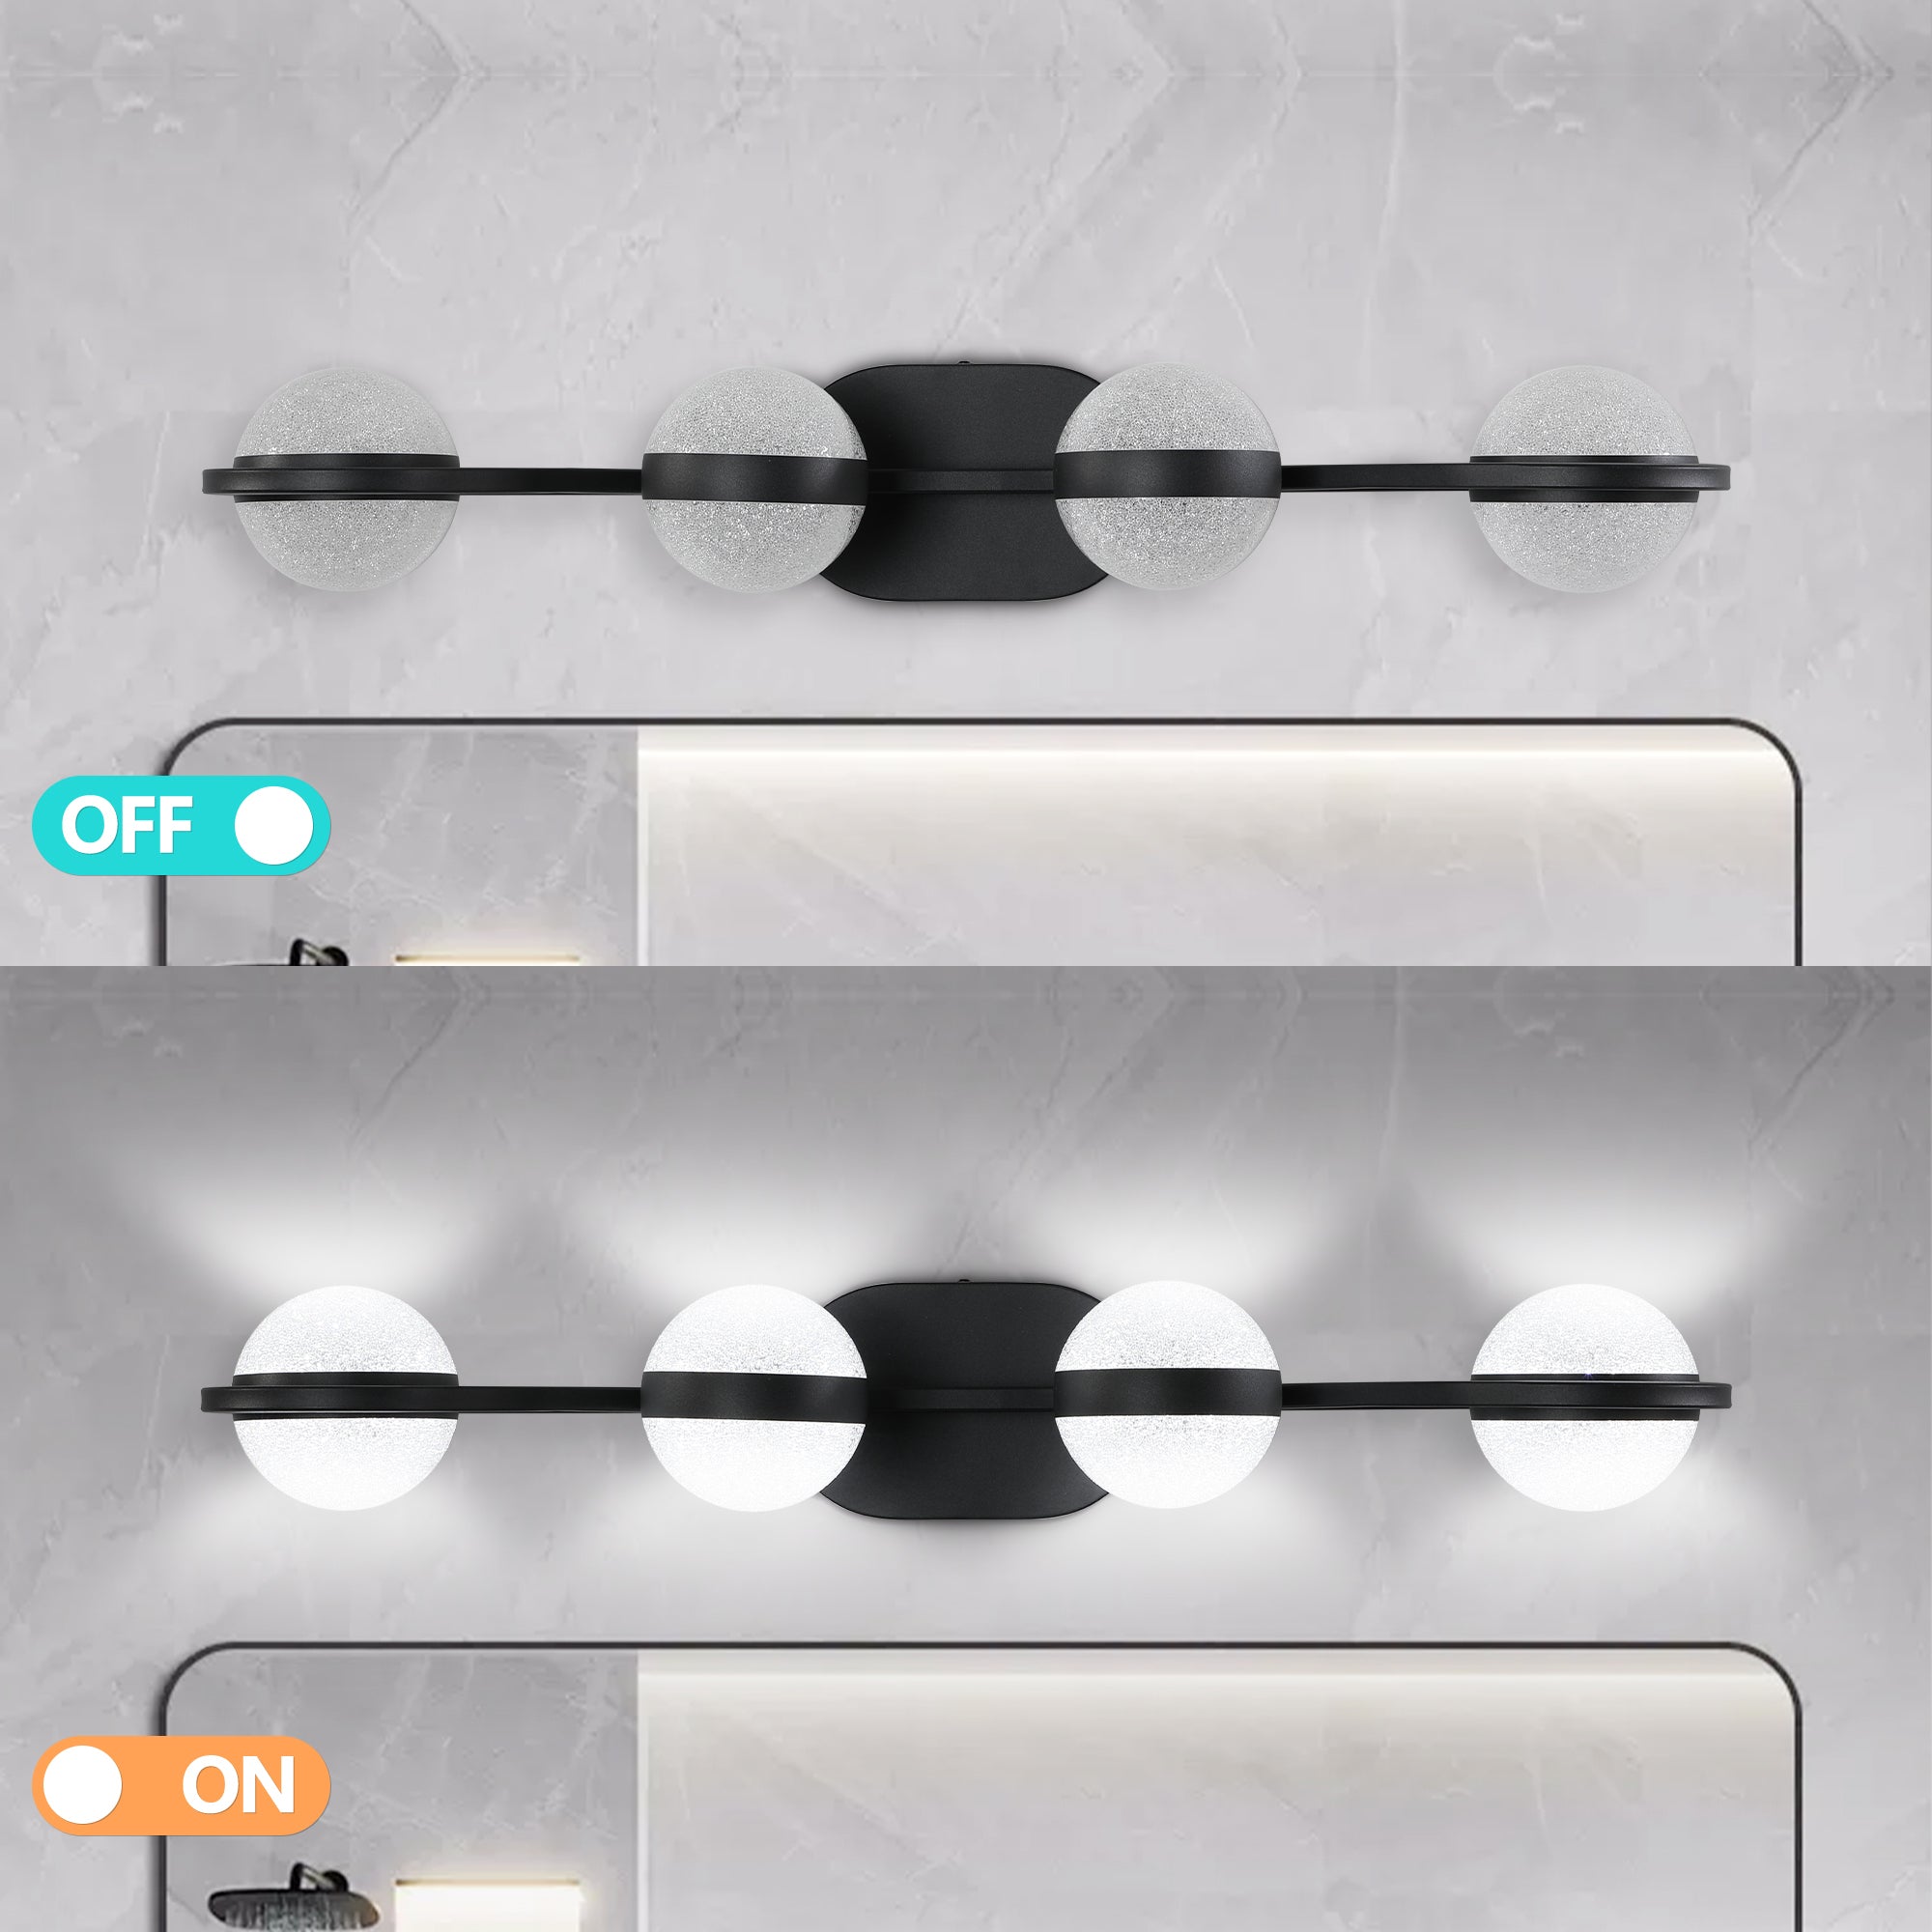 Vanity Lights With 4 LED Bulbs For Bathroom Lighting - Black